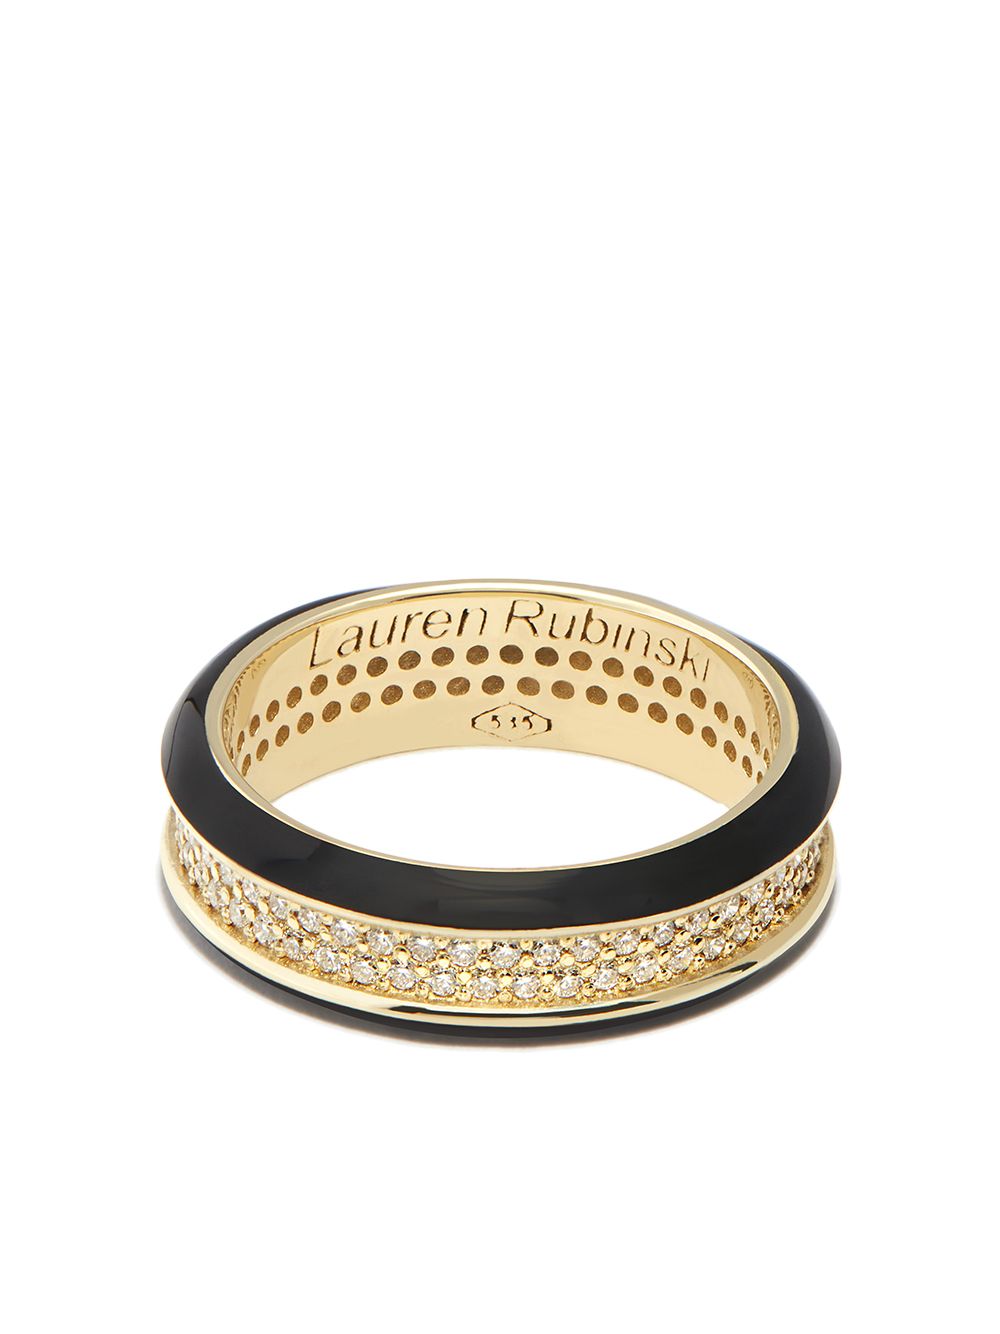 Lauren Rubinski 14kt yellow gold diamond ring von Lauren Rubinski